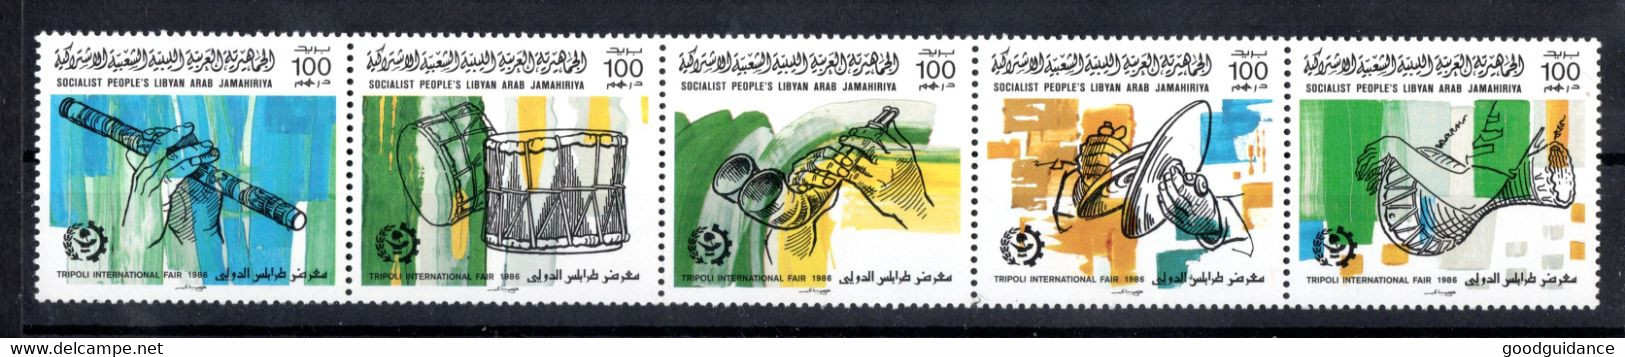 1986 - Libya - The 24th International Trade Fair, Tripoli - Musical Instruments - Strip Of 5 Stamps - MNH** - Libië